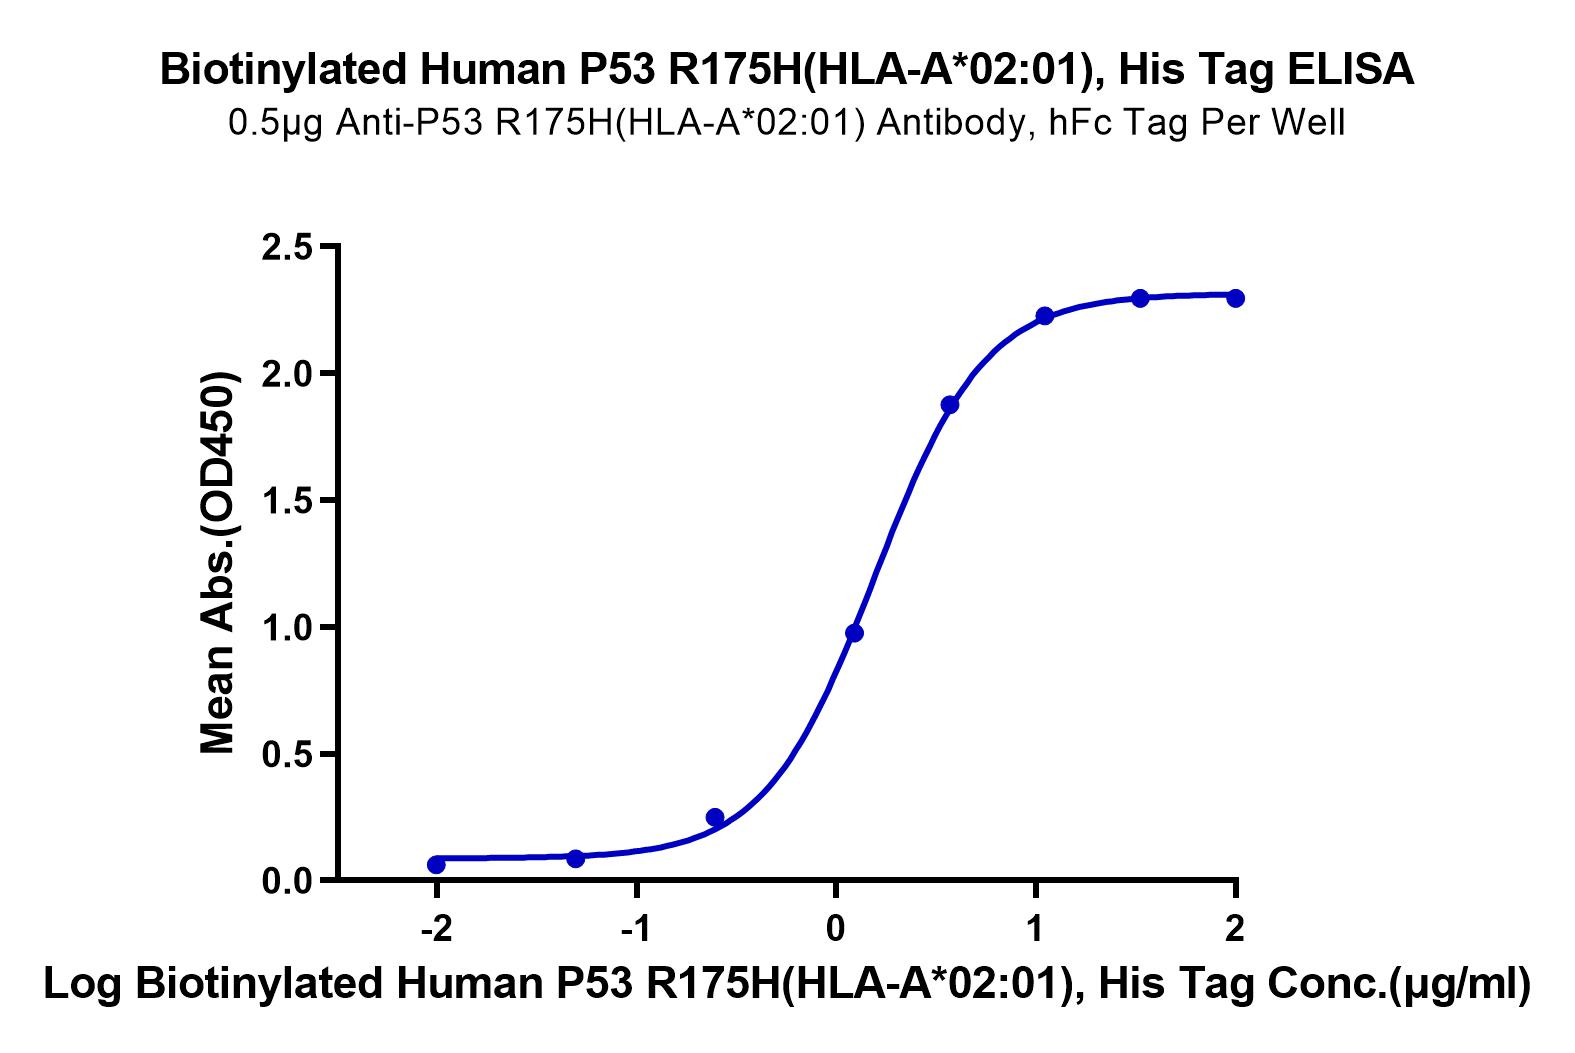 Biotinylated Human P53 R175H (HLA-A*02:01) Protein (LTP10866)